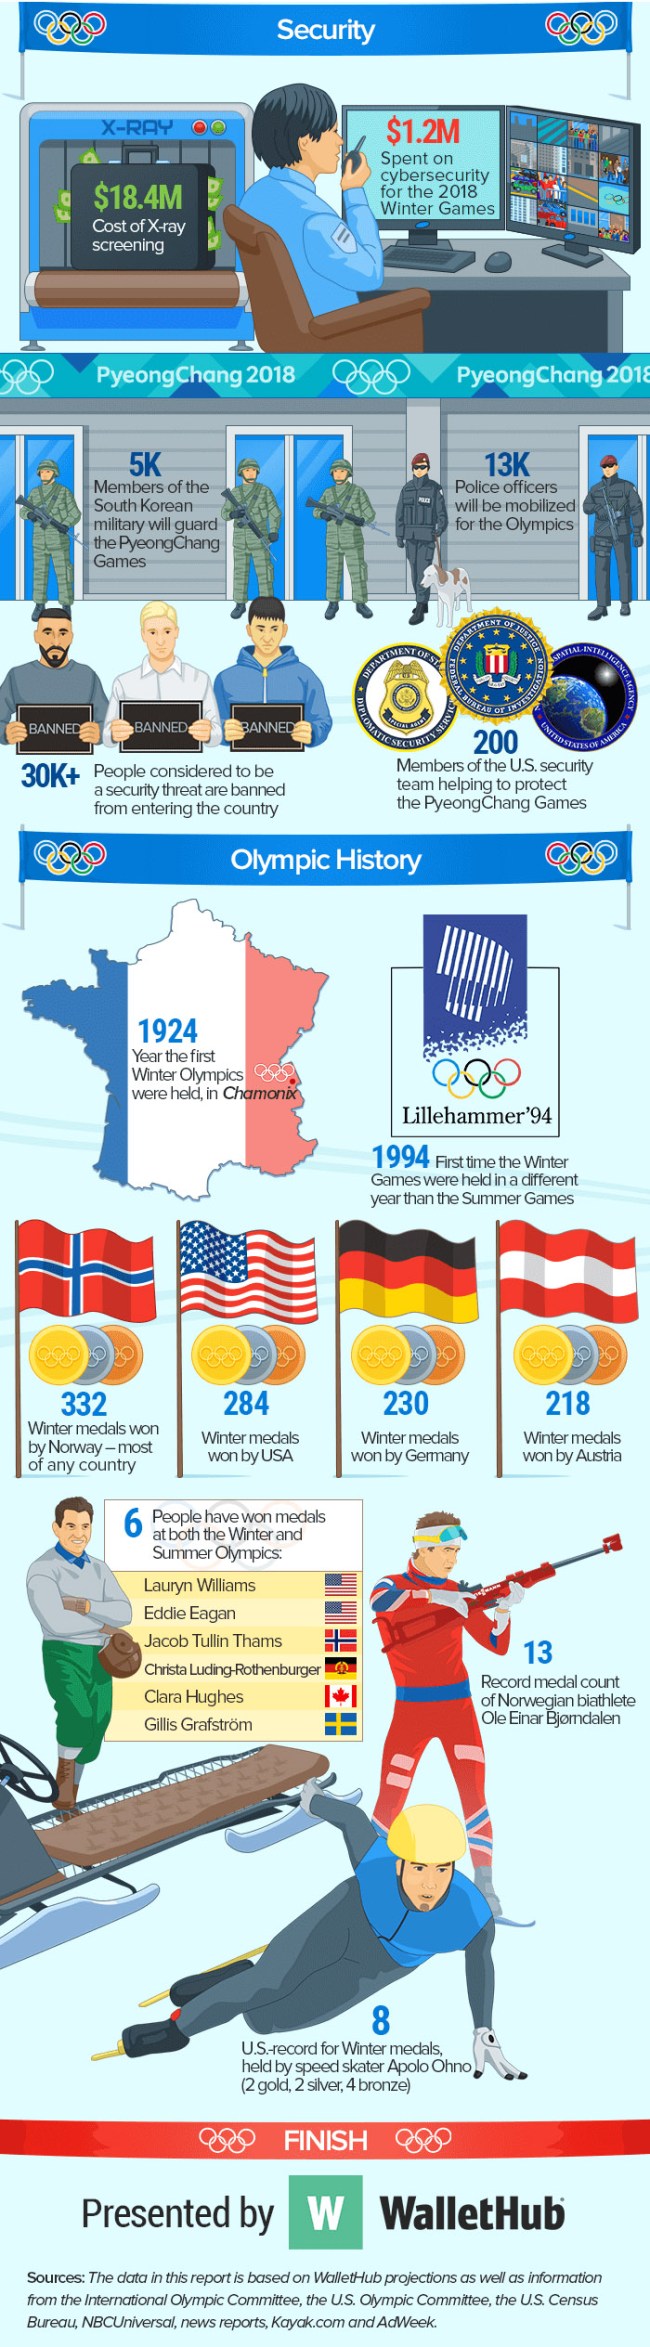 2018 Winter Olympics Facts Statistics Trivia